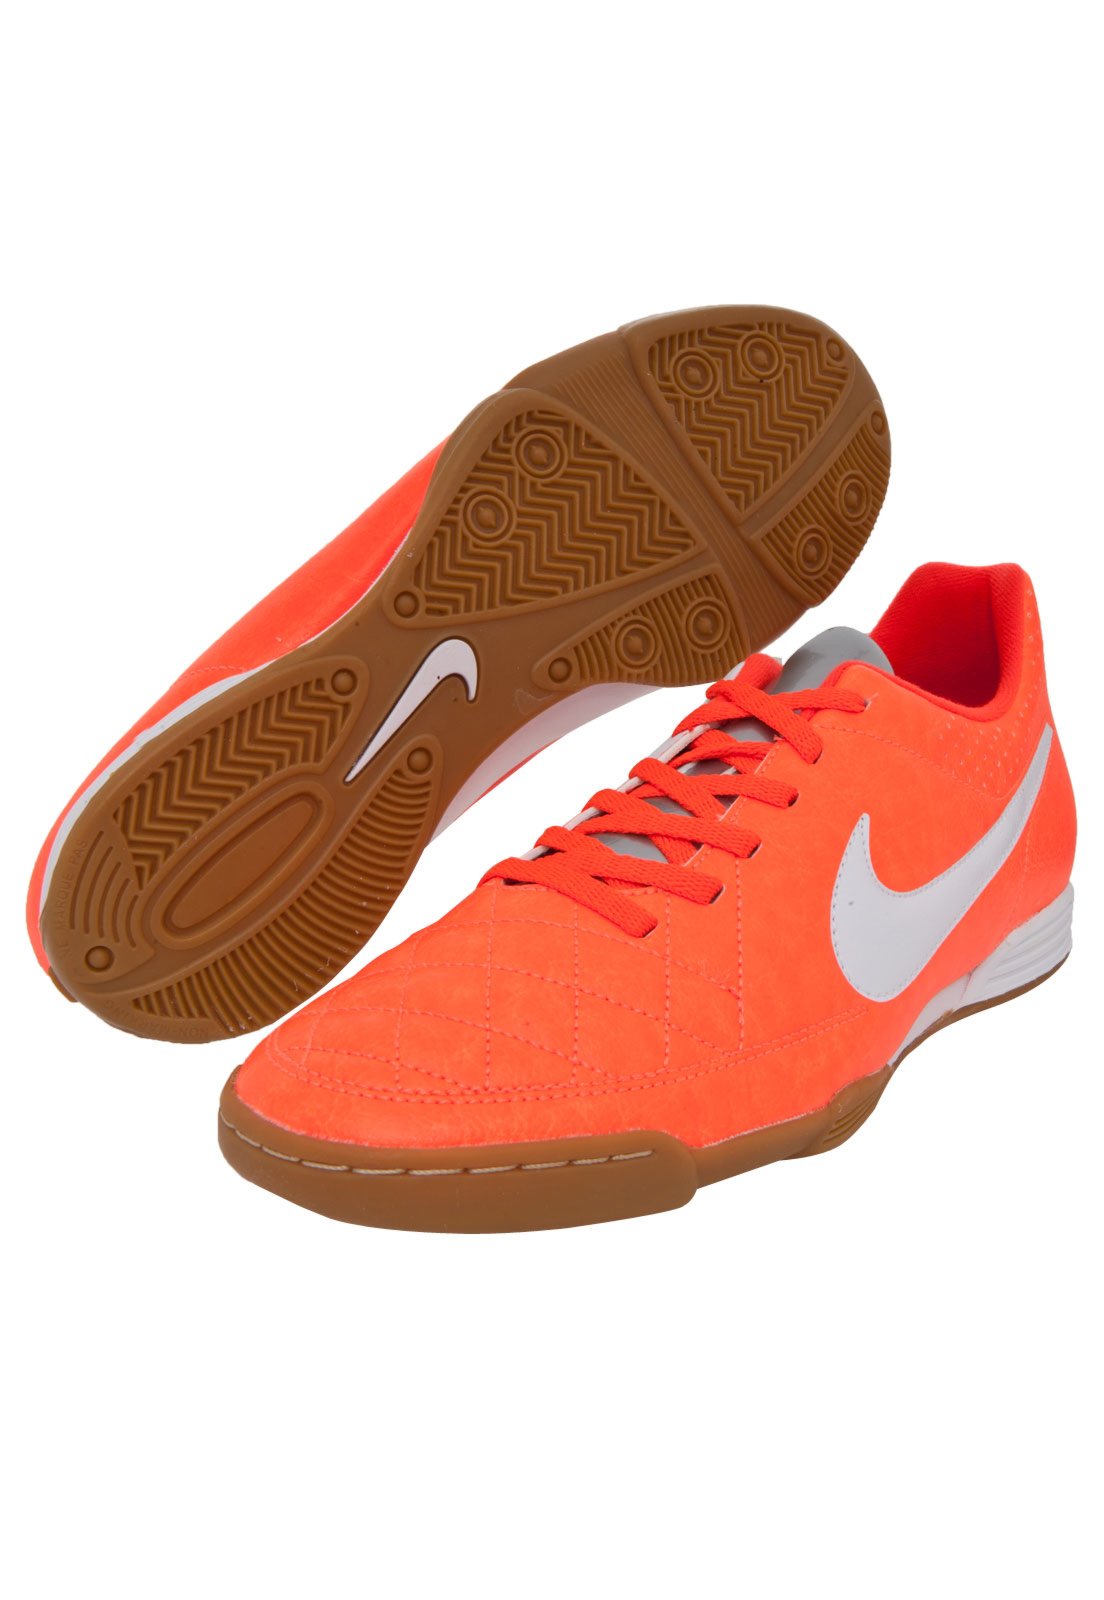 tenis futsal laranja